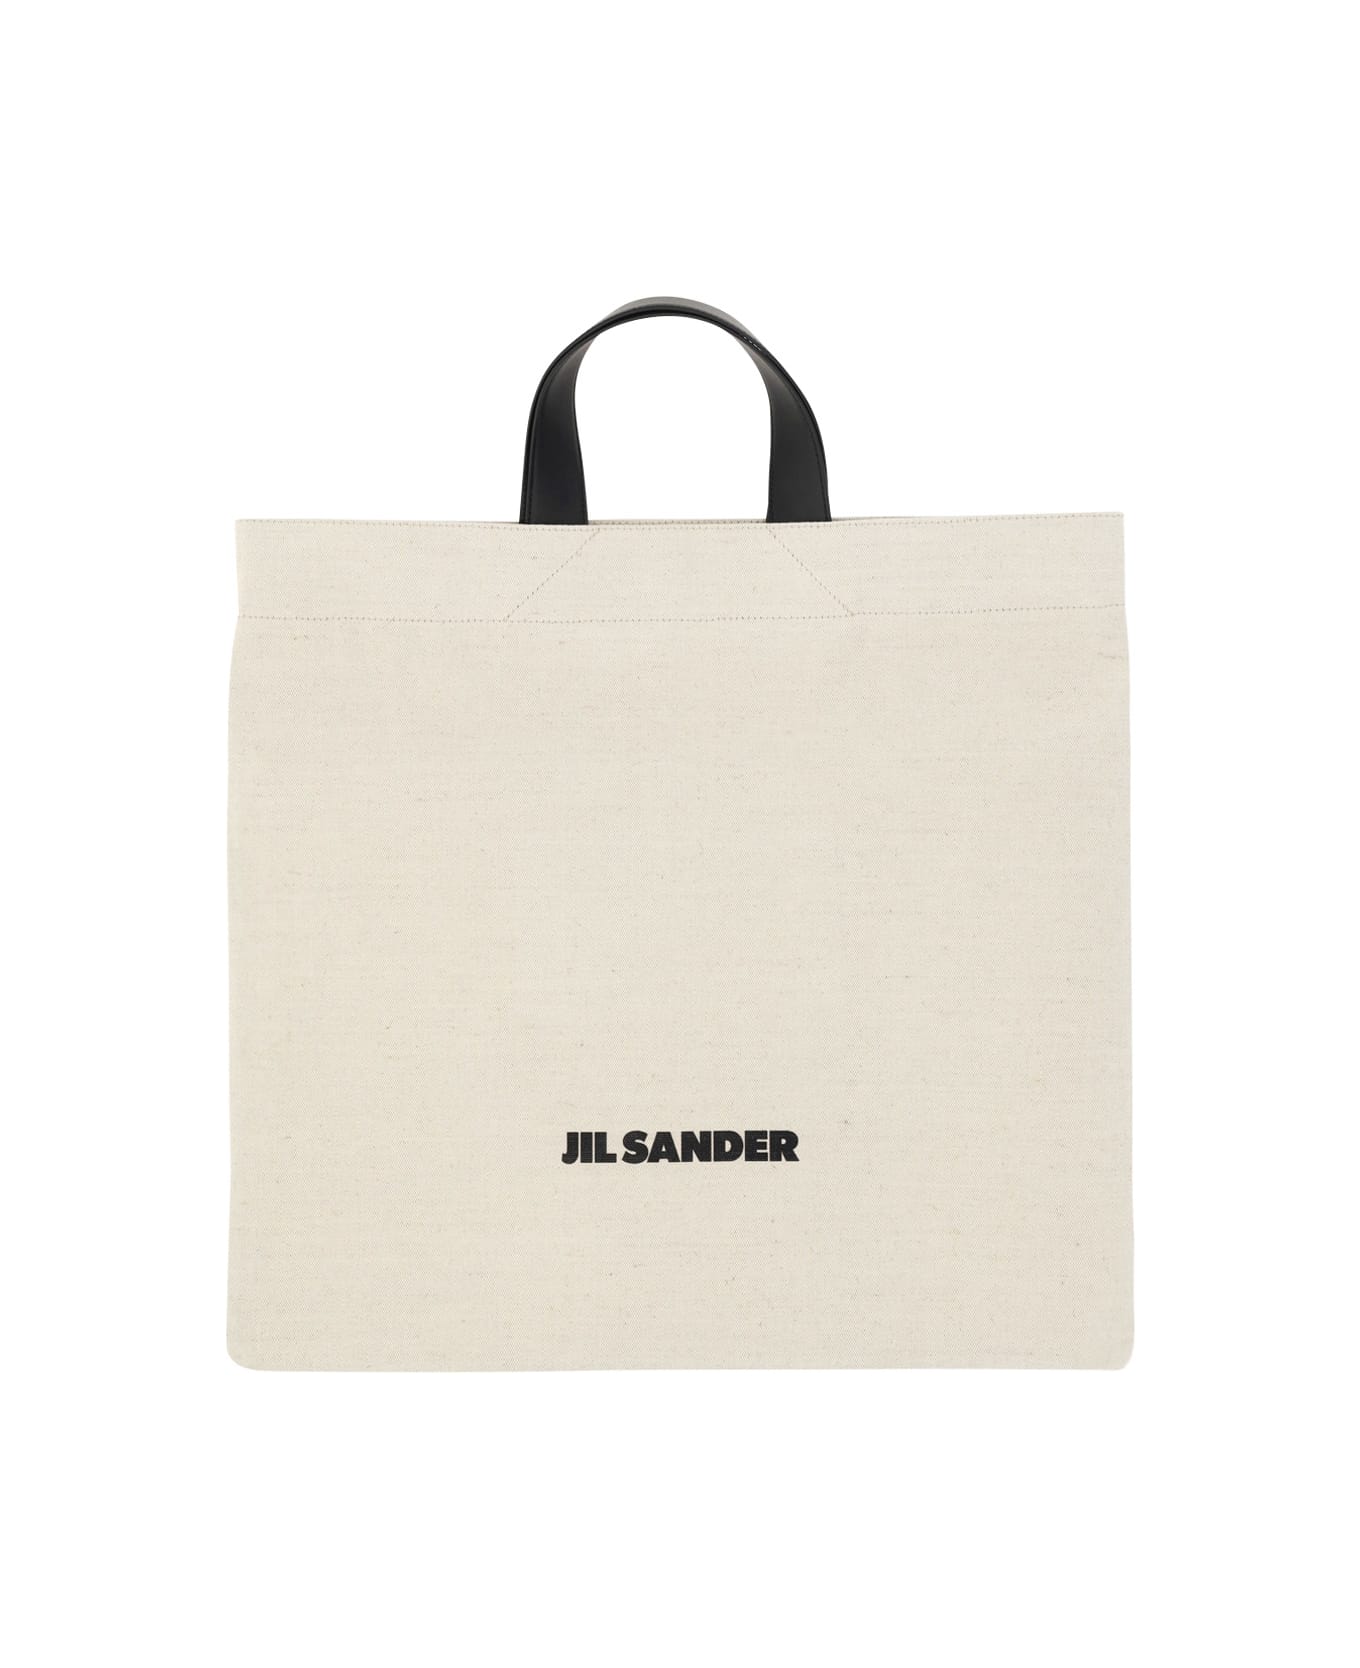 Jil Sander Sand Canvas Shopping Bag - Natural